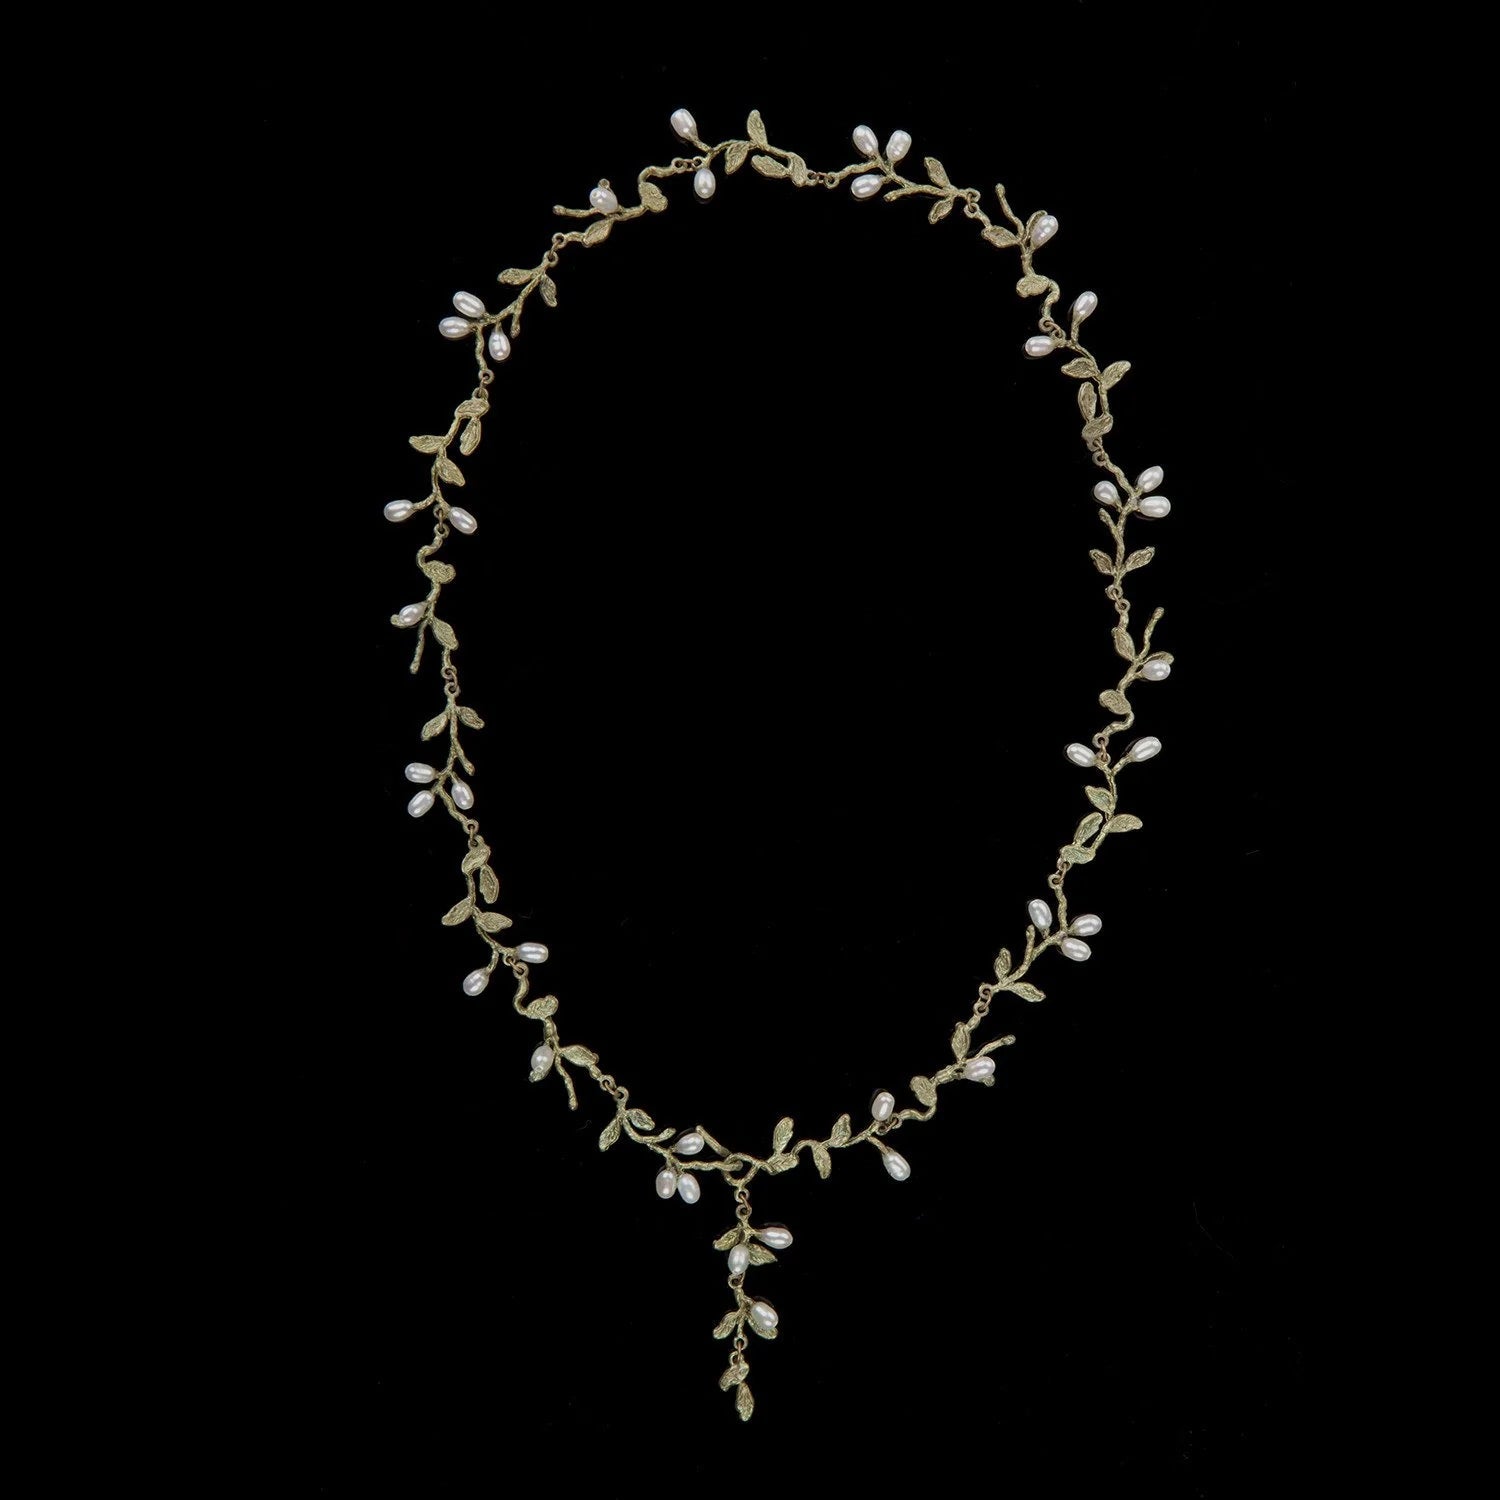 Carolina Drop Necklace - The Nancy Smillie Shop - Art, Jewellery & Designer Gifts Glasgow